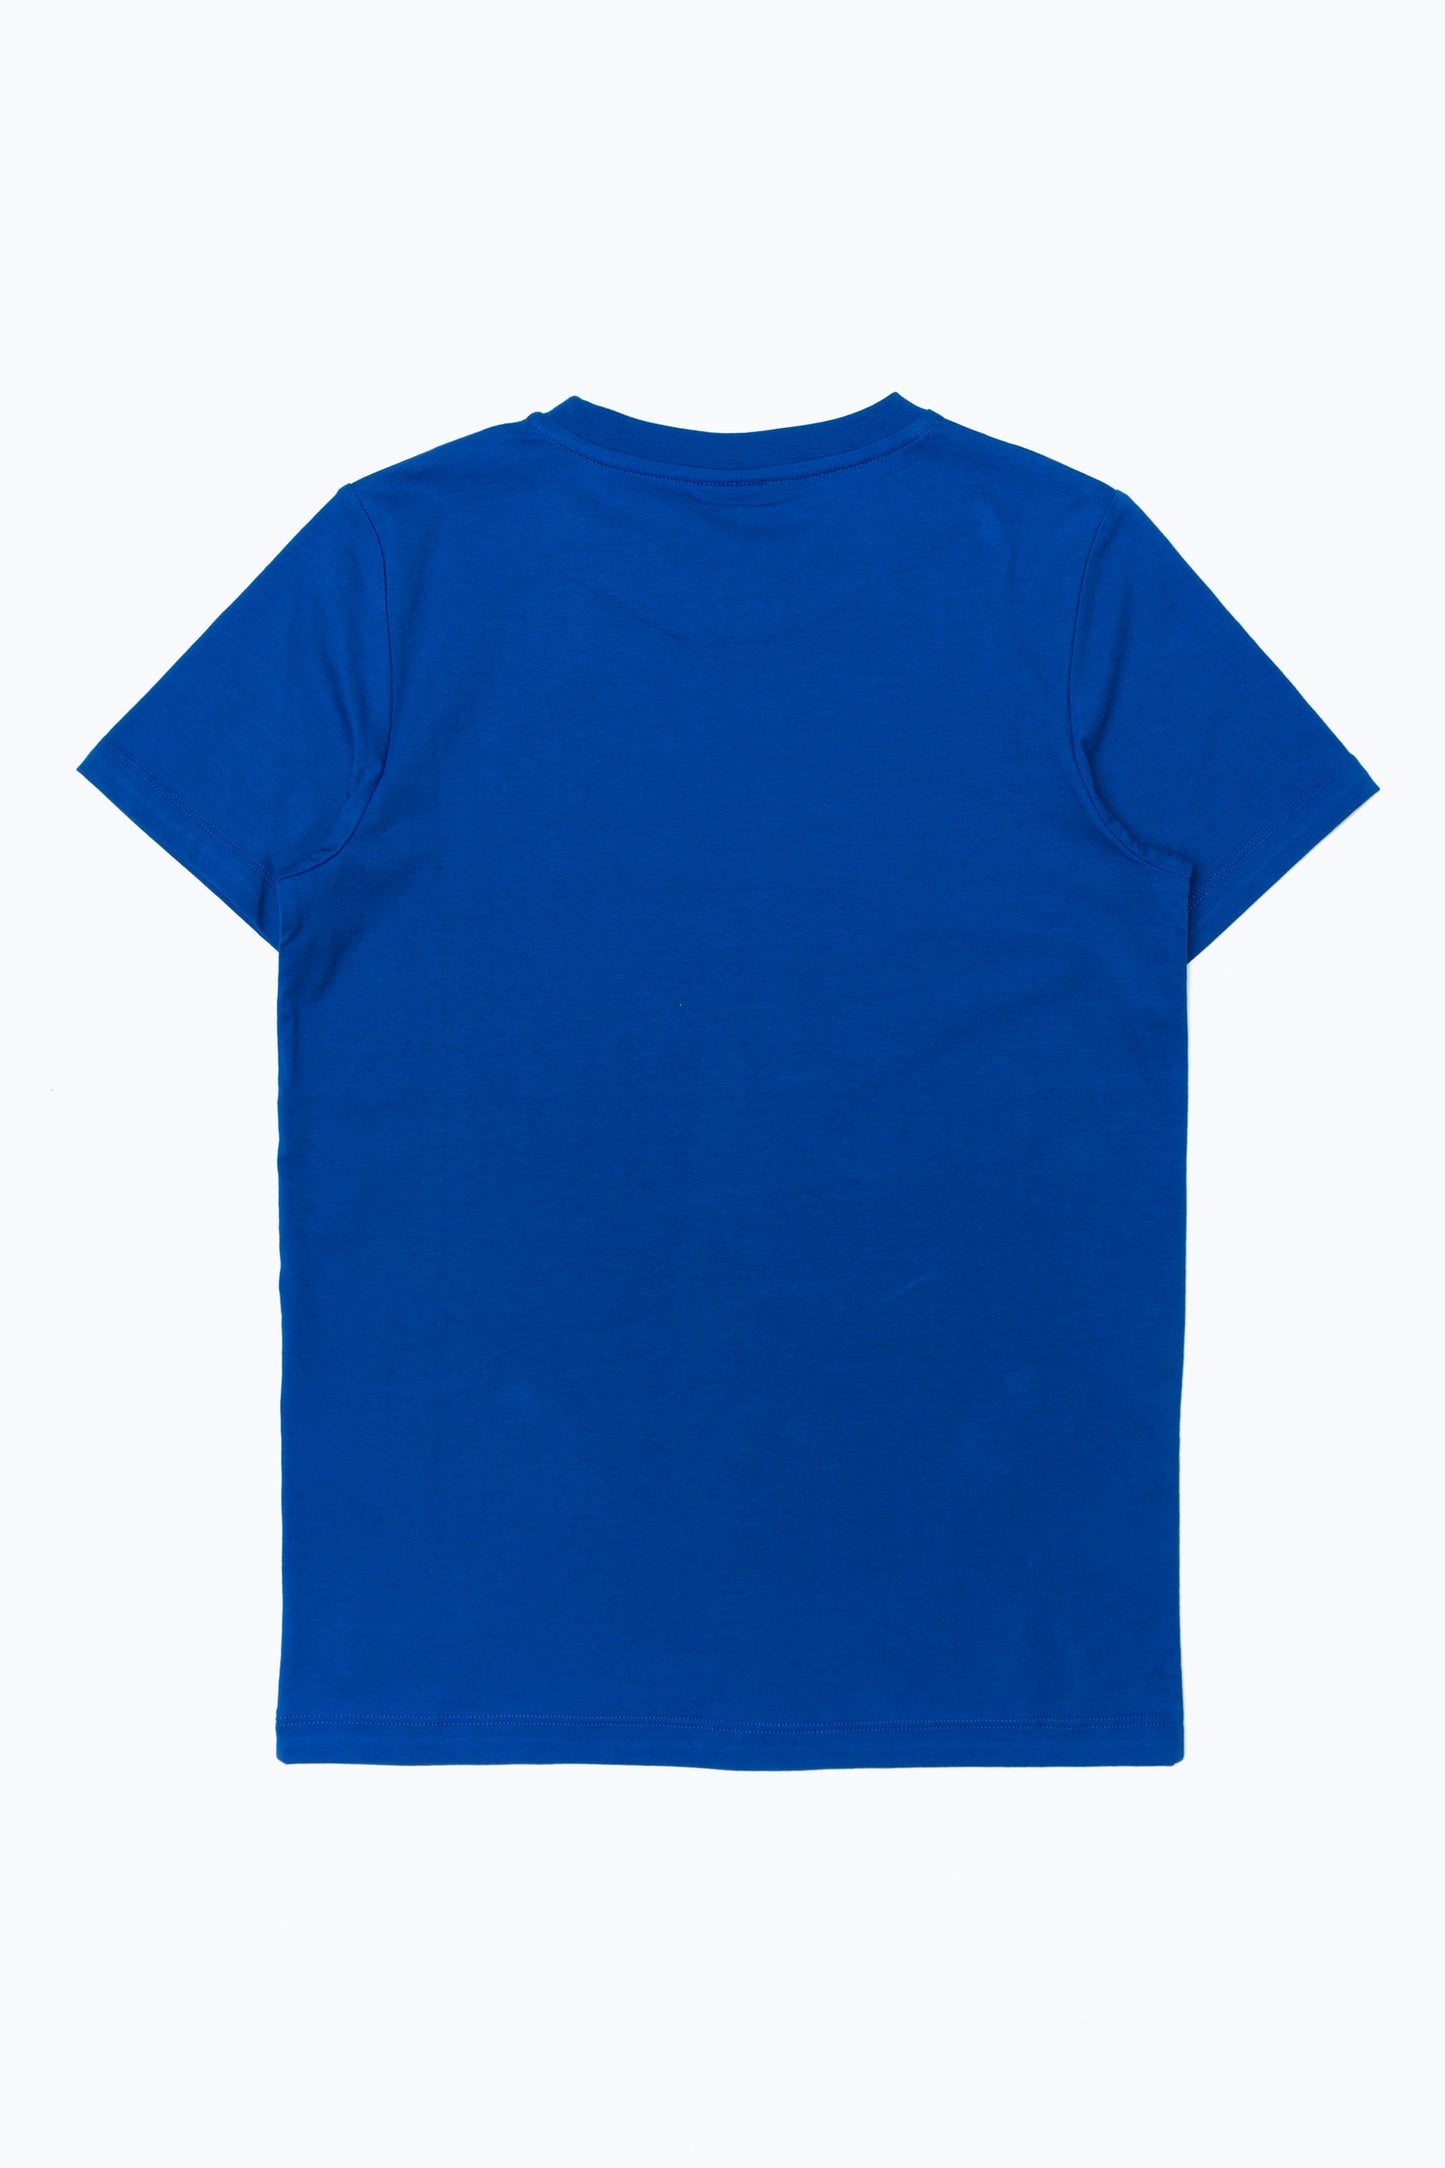 Hype Blue Graffiti Script Kids T-Shirt